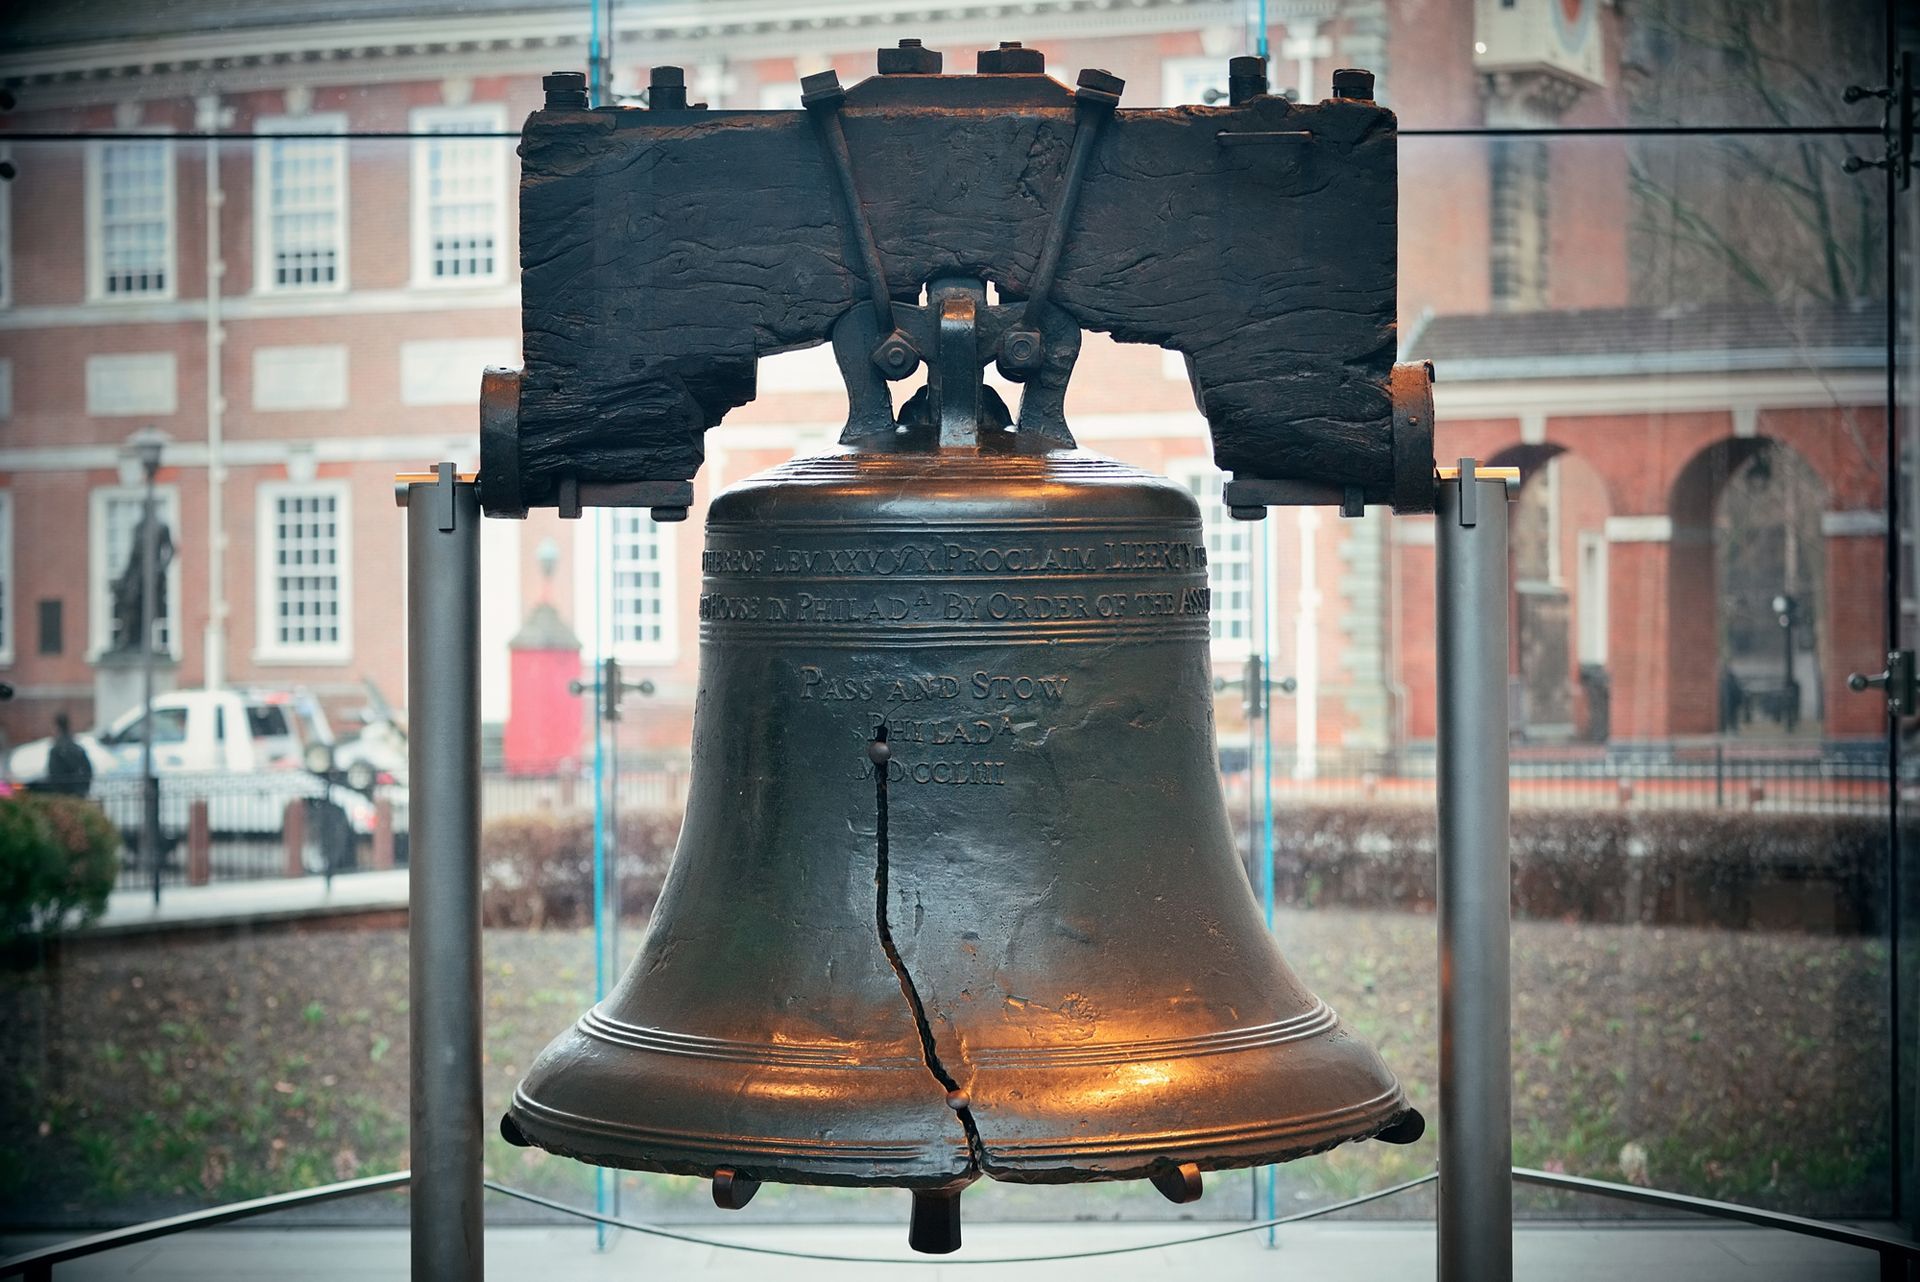 Philadelphia Attractions - Liberty Bell